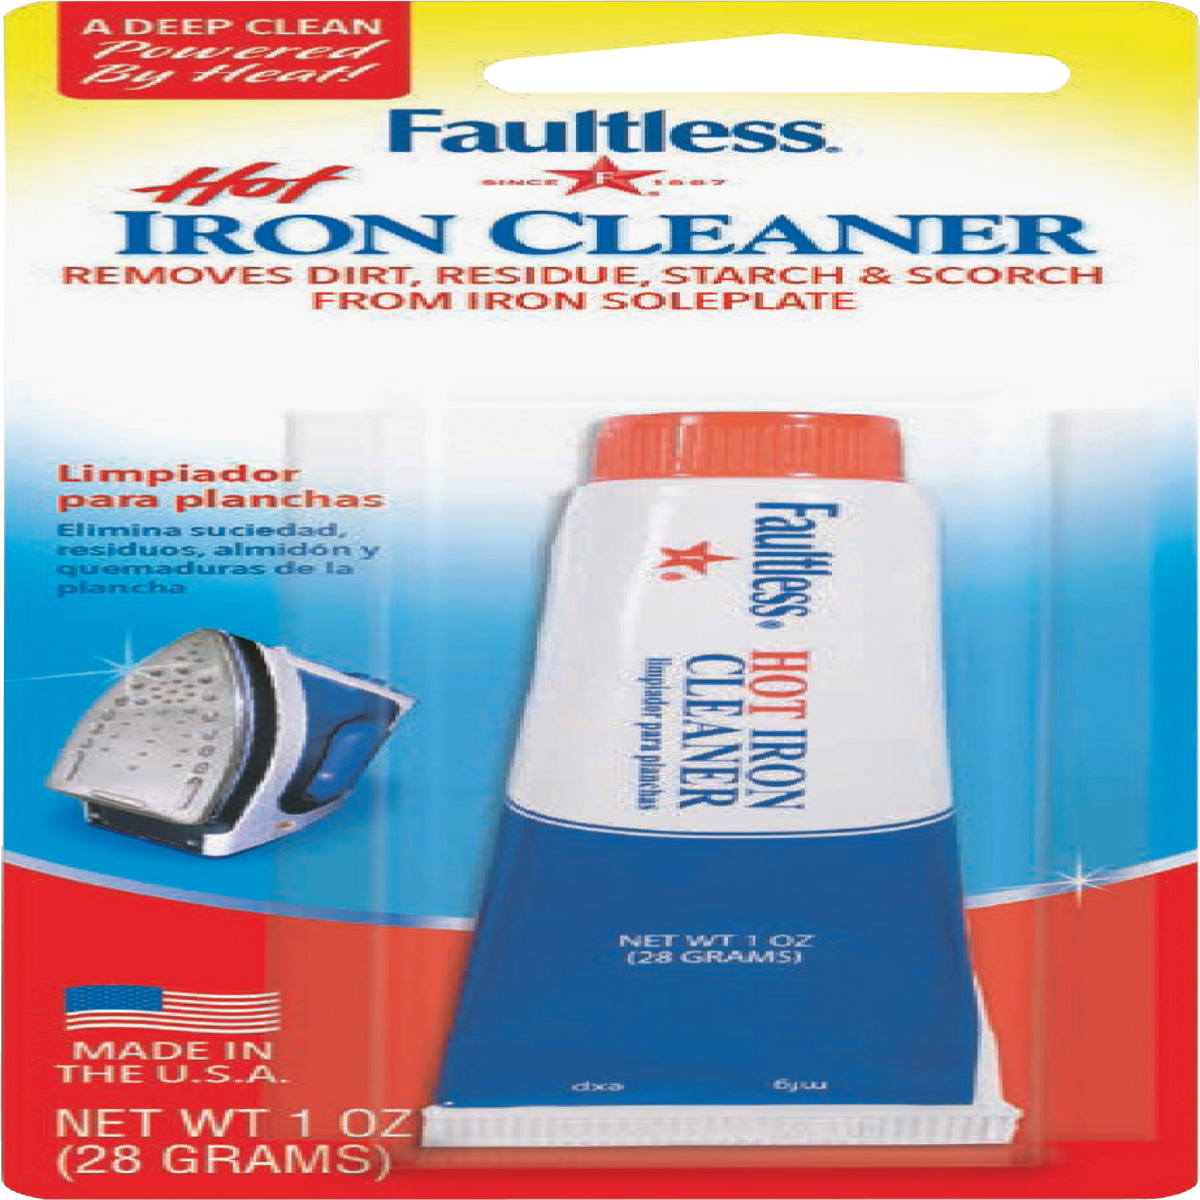 Iron Cleaner